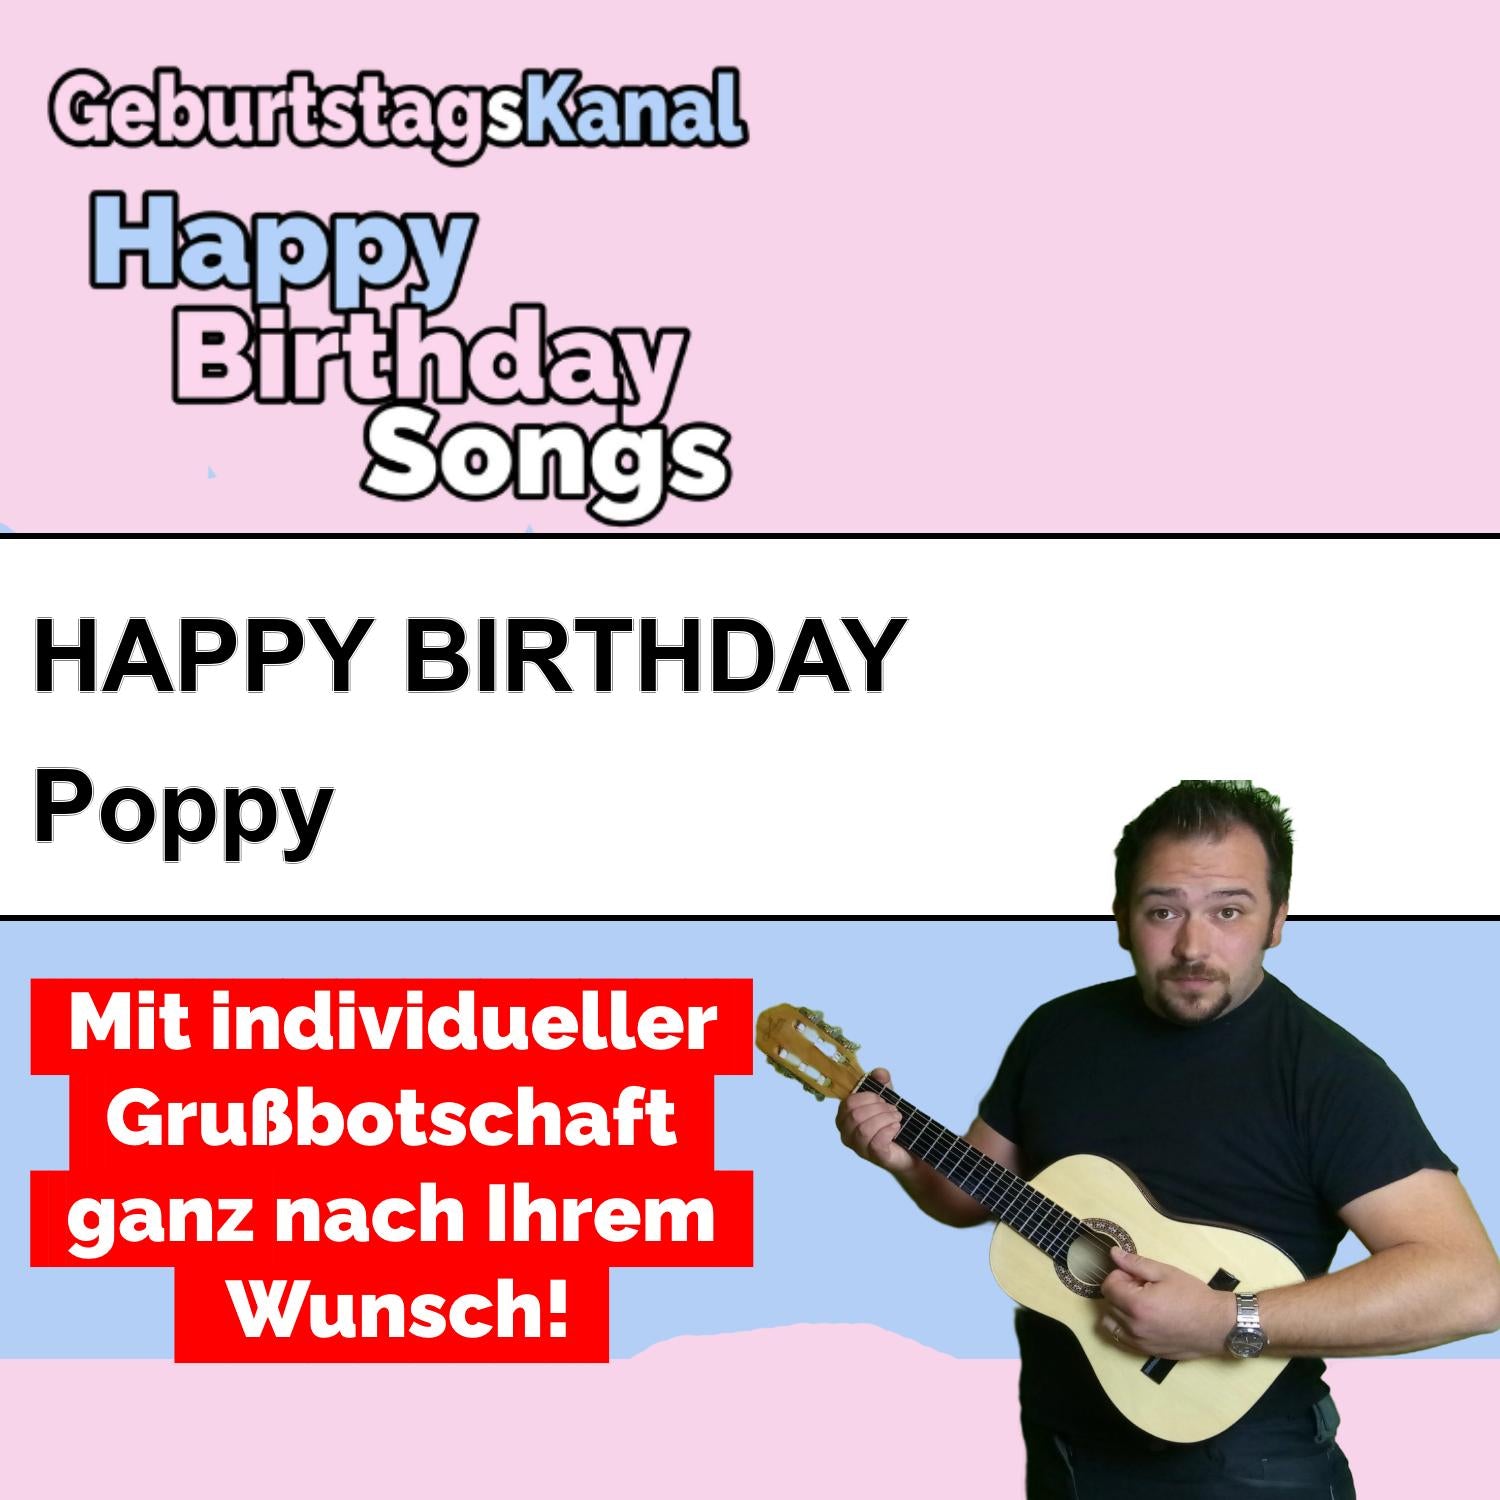 Produktbild Happy Birthday to you Poppy mit Wunschgrußbotschaft